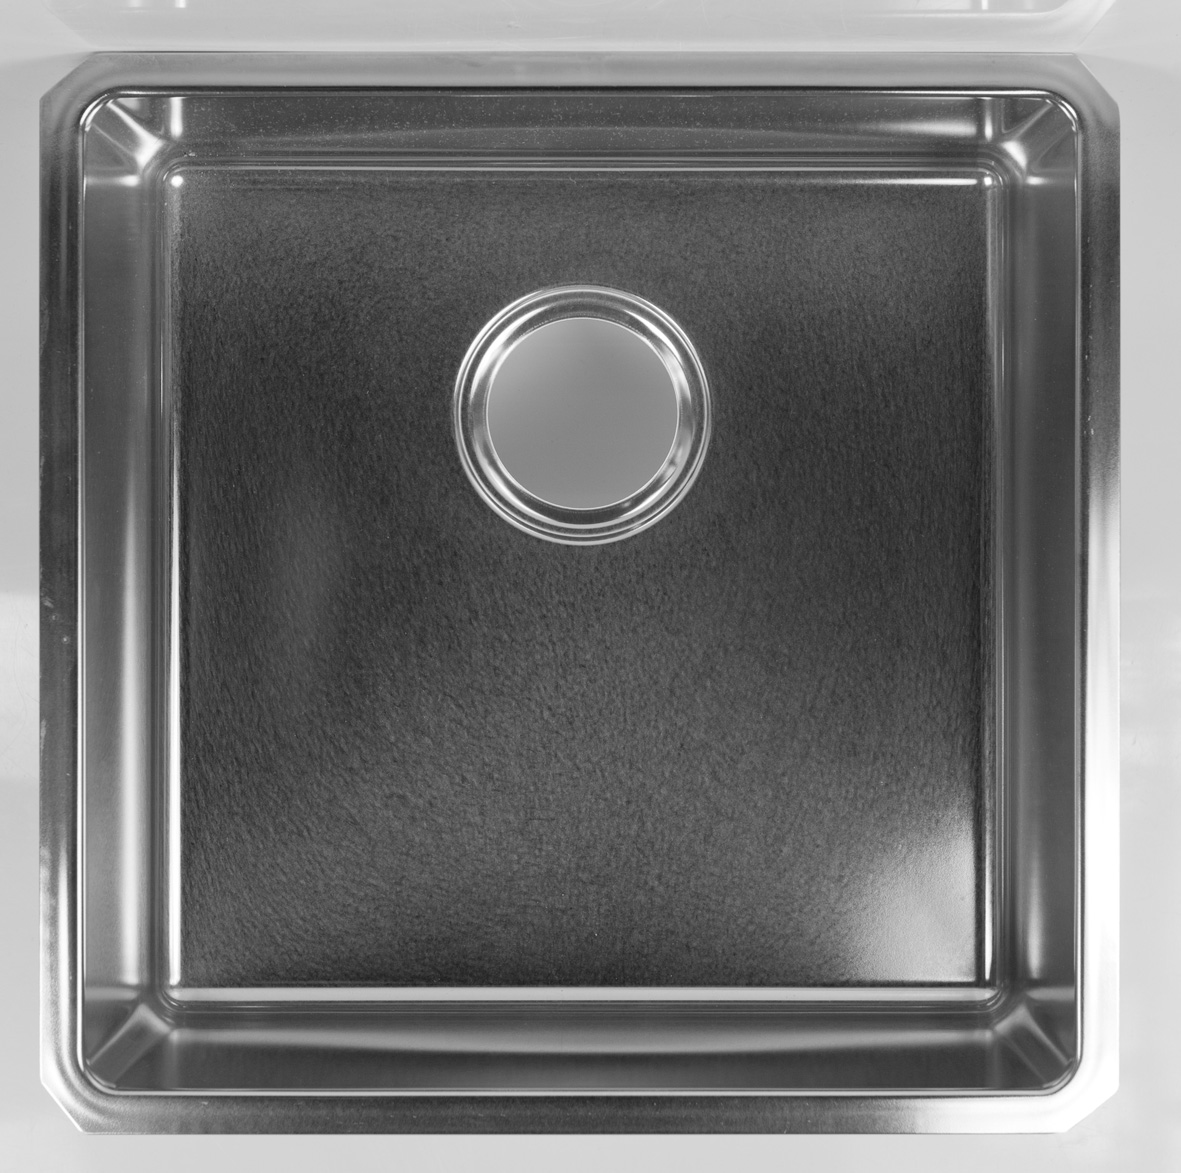 Tight corner radius sink 304 stainless steel 400 x 400 x 200